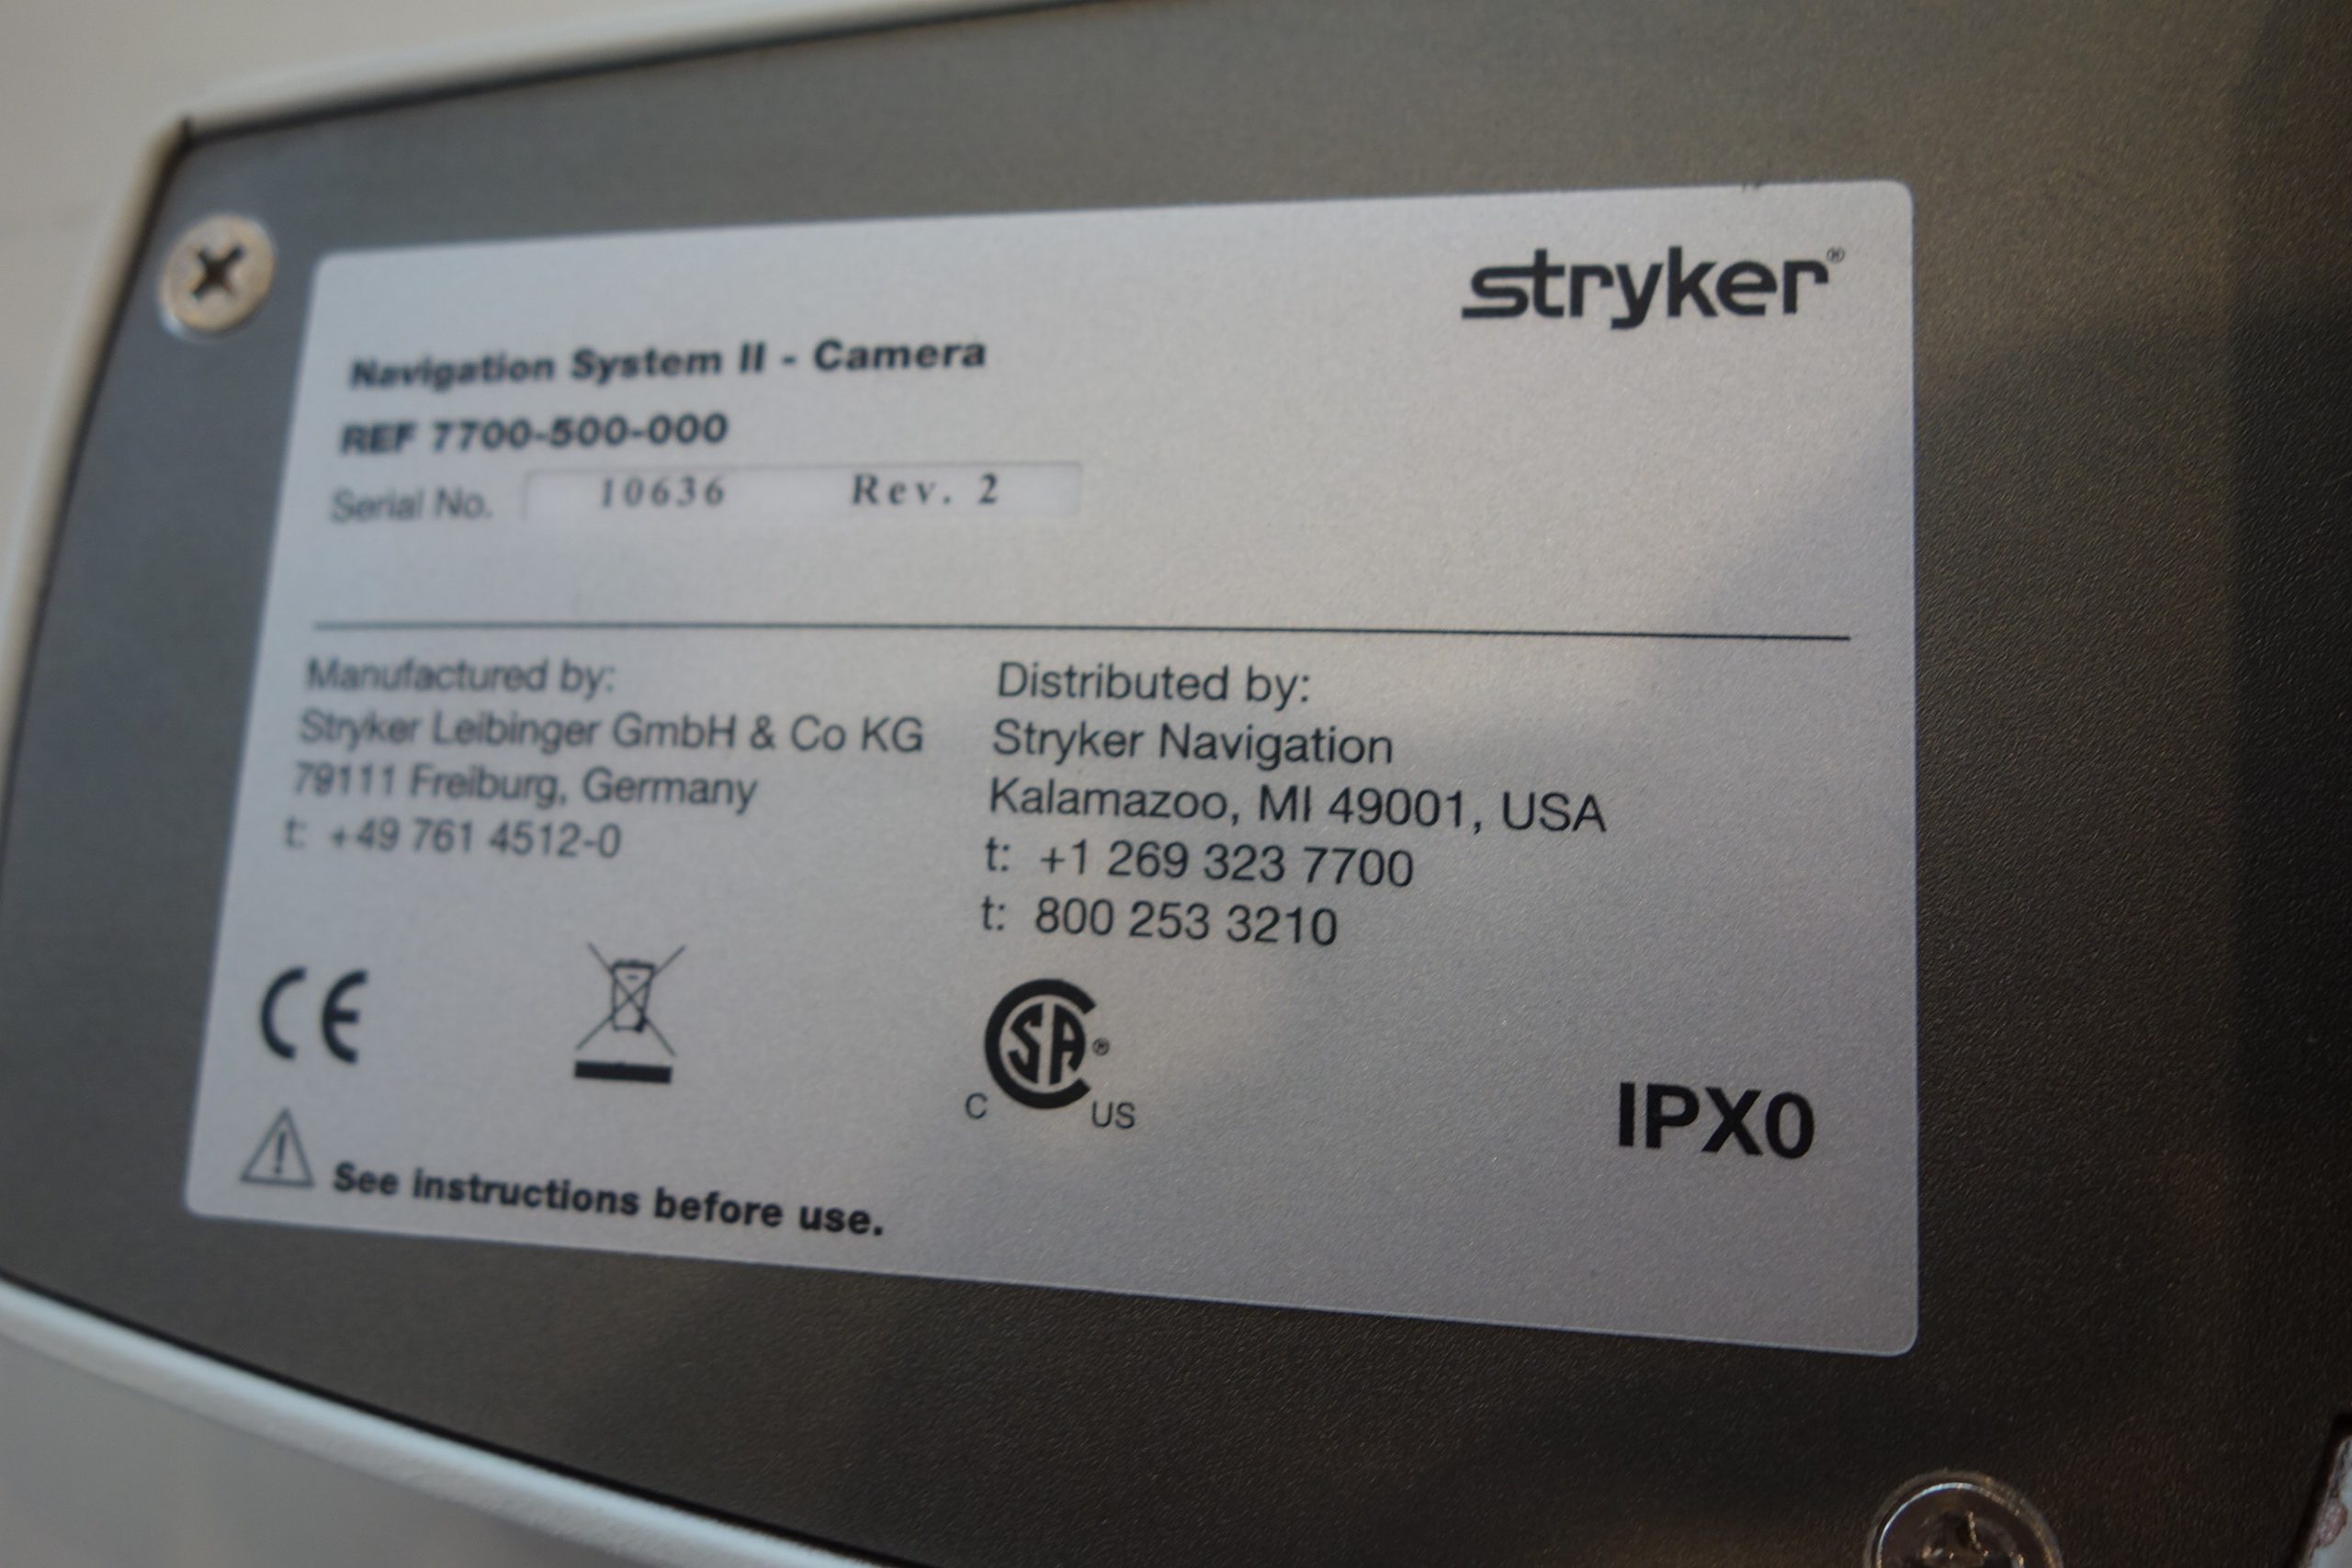 stryker-navigation-zwei-system-camera-kamerakopf-ref-7700-500-000-3723